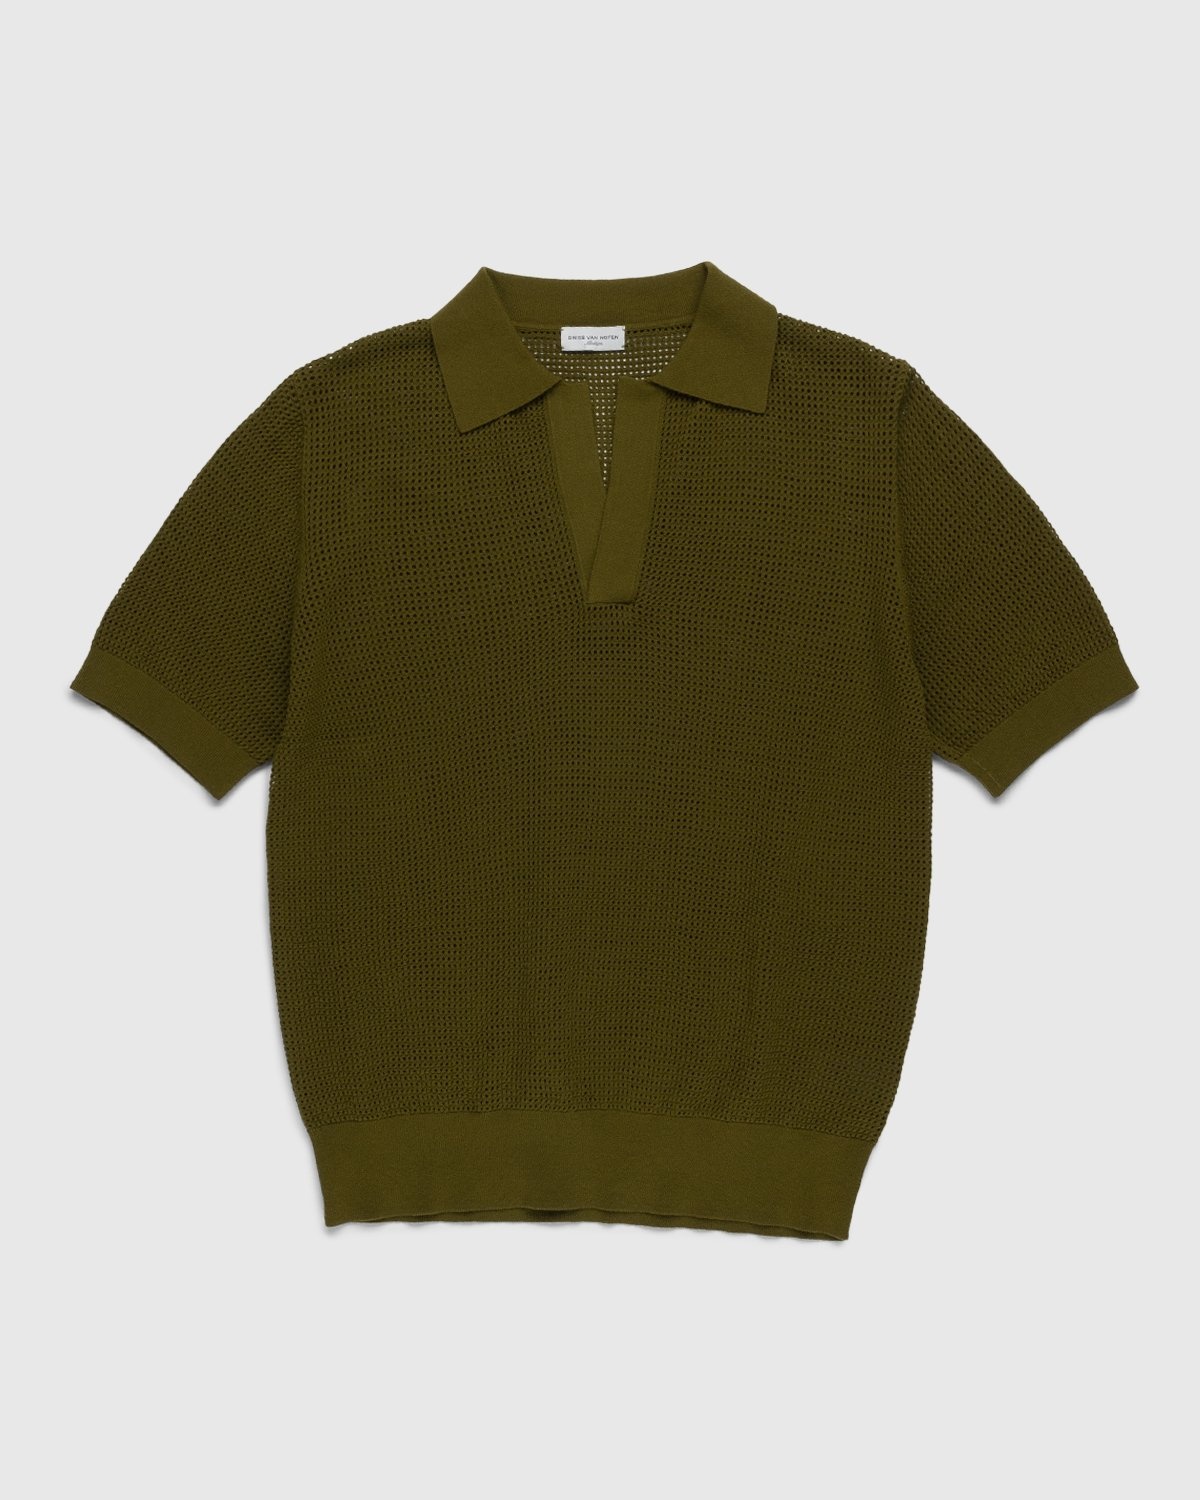 Dries van Noten – Jael Polo Shirt Olive - Shirts - Green - Image 1